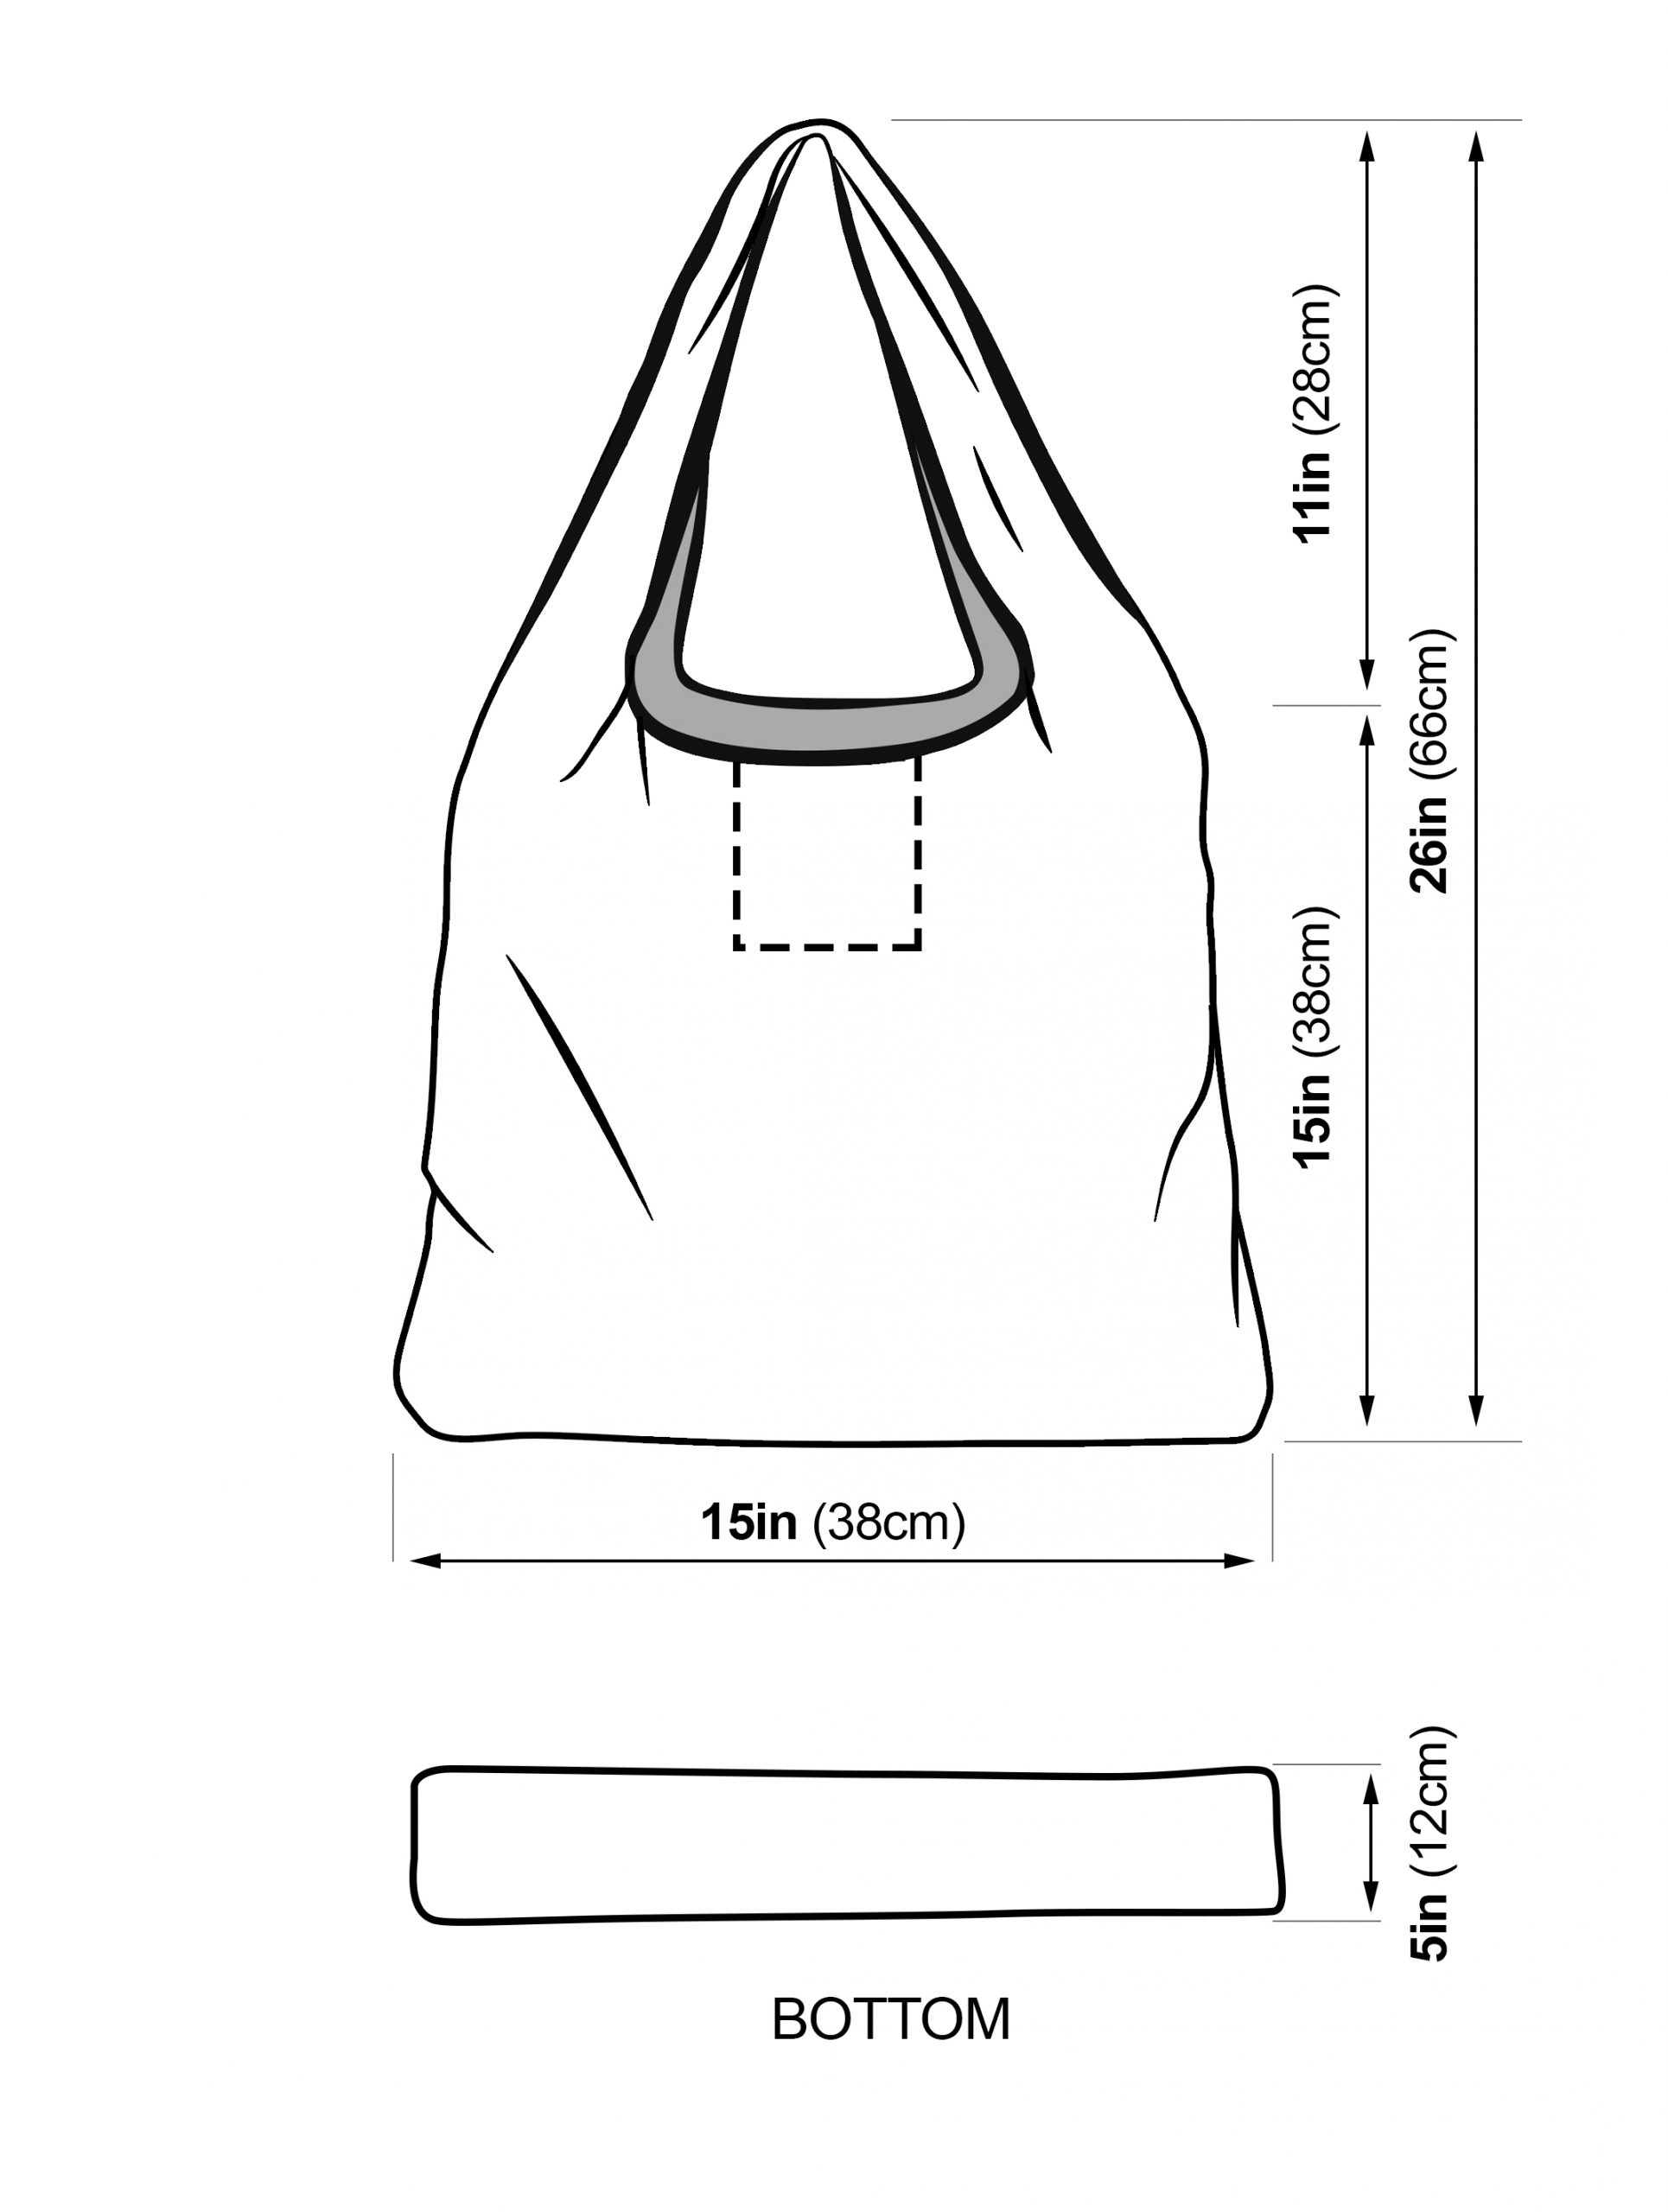 reusable grocery bag dimensions